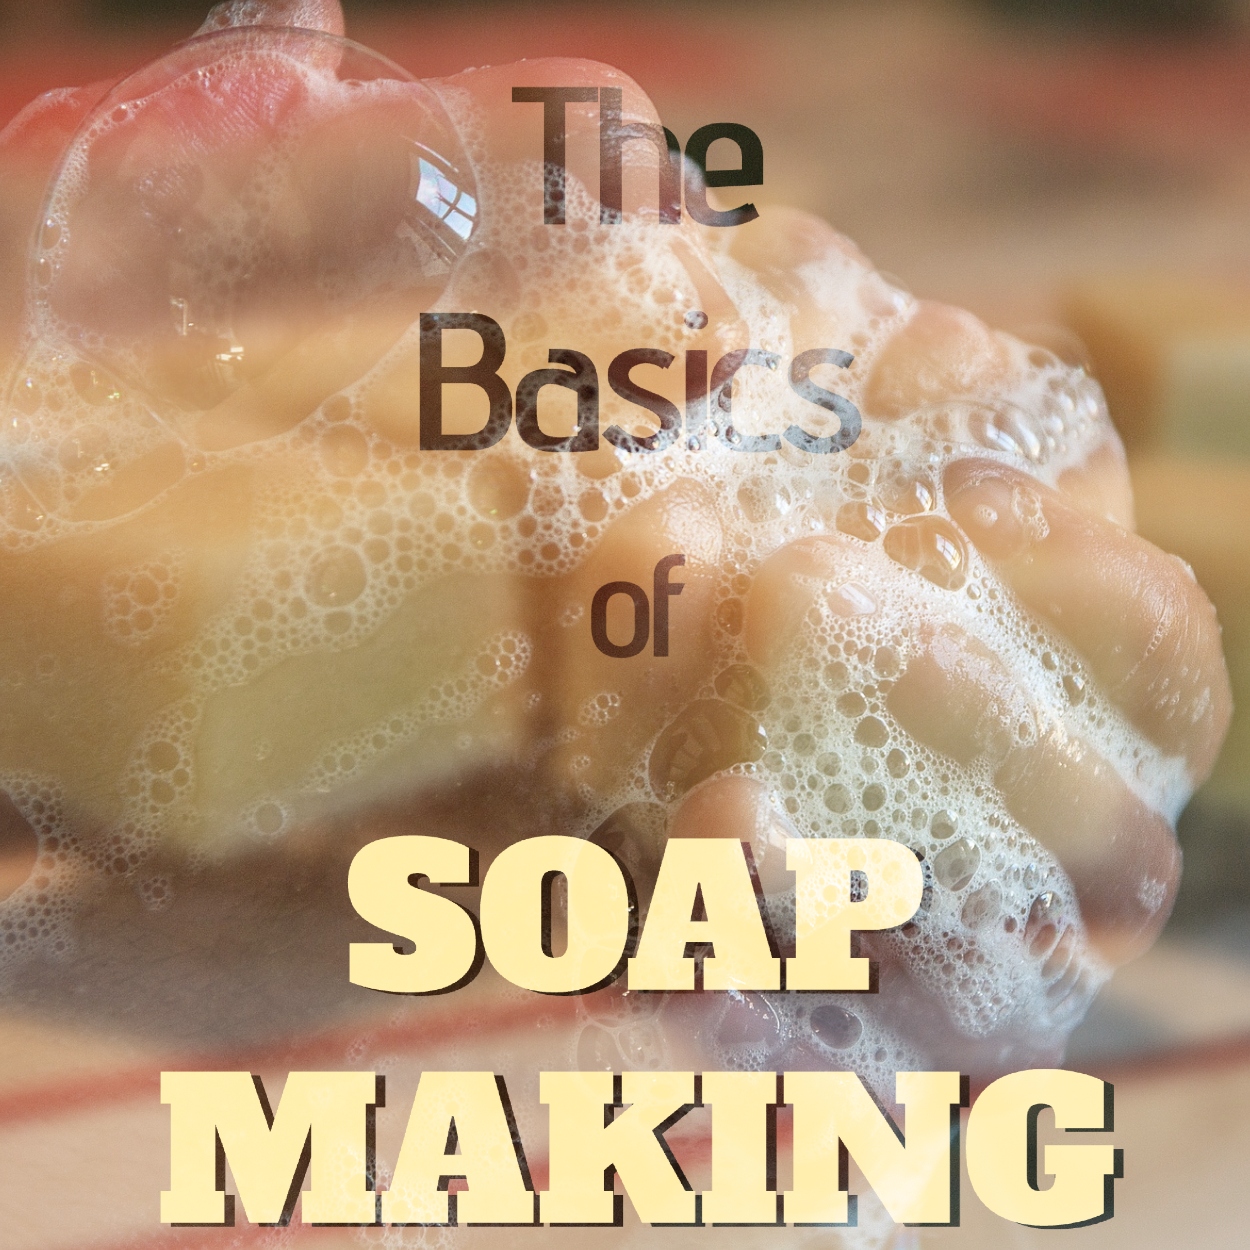 The basics of soap making